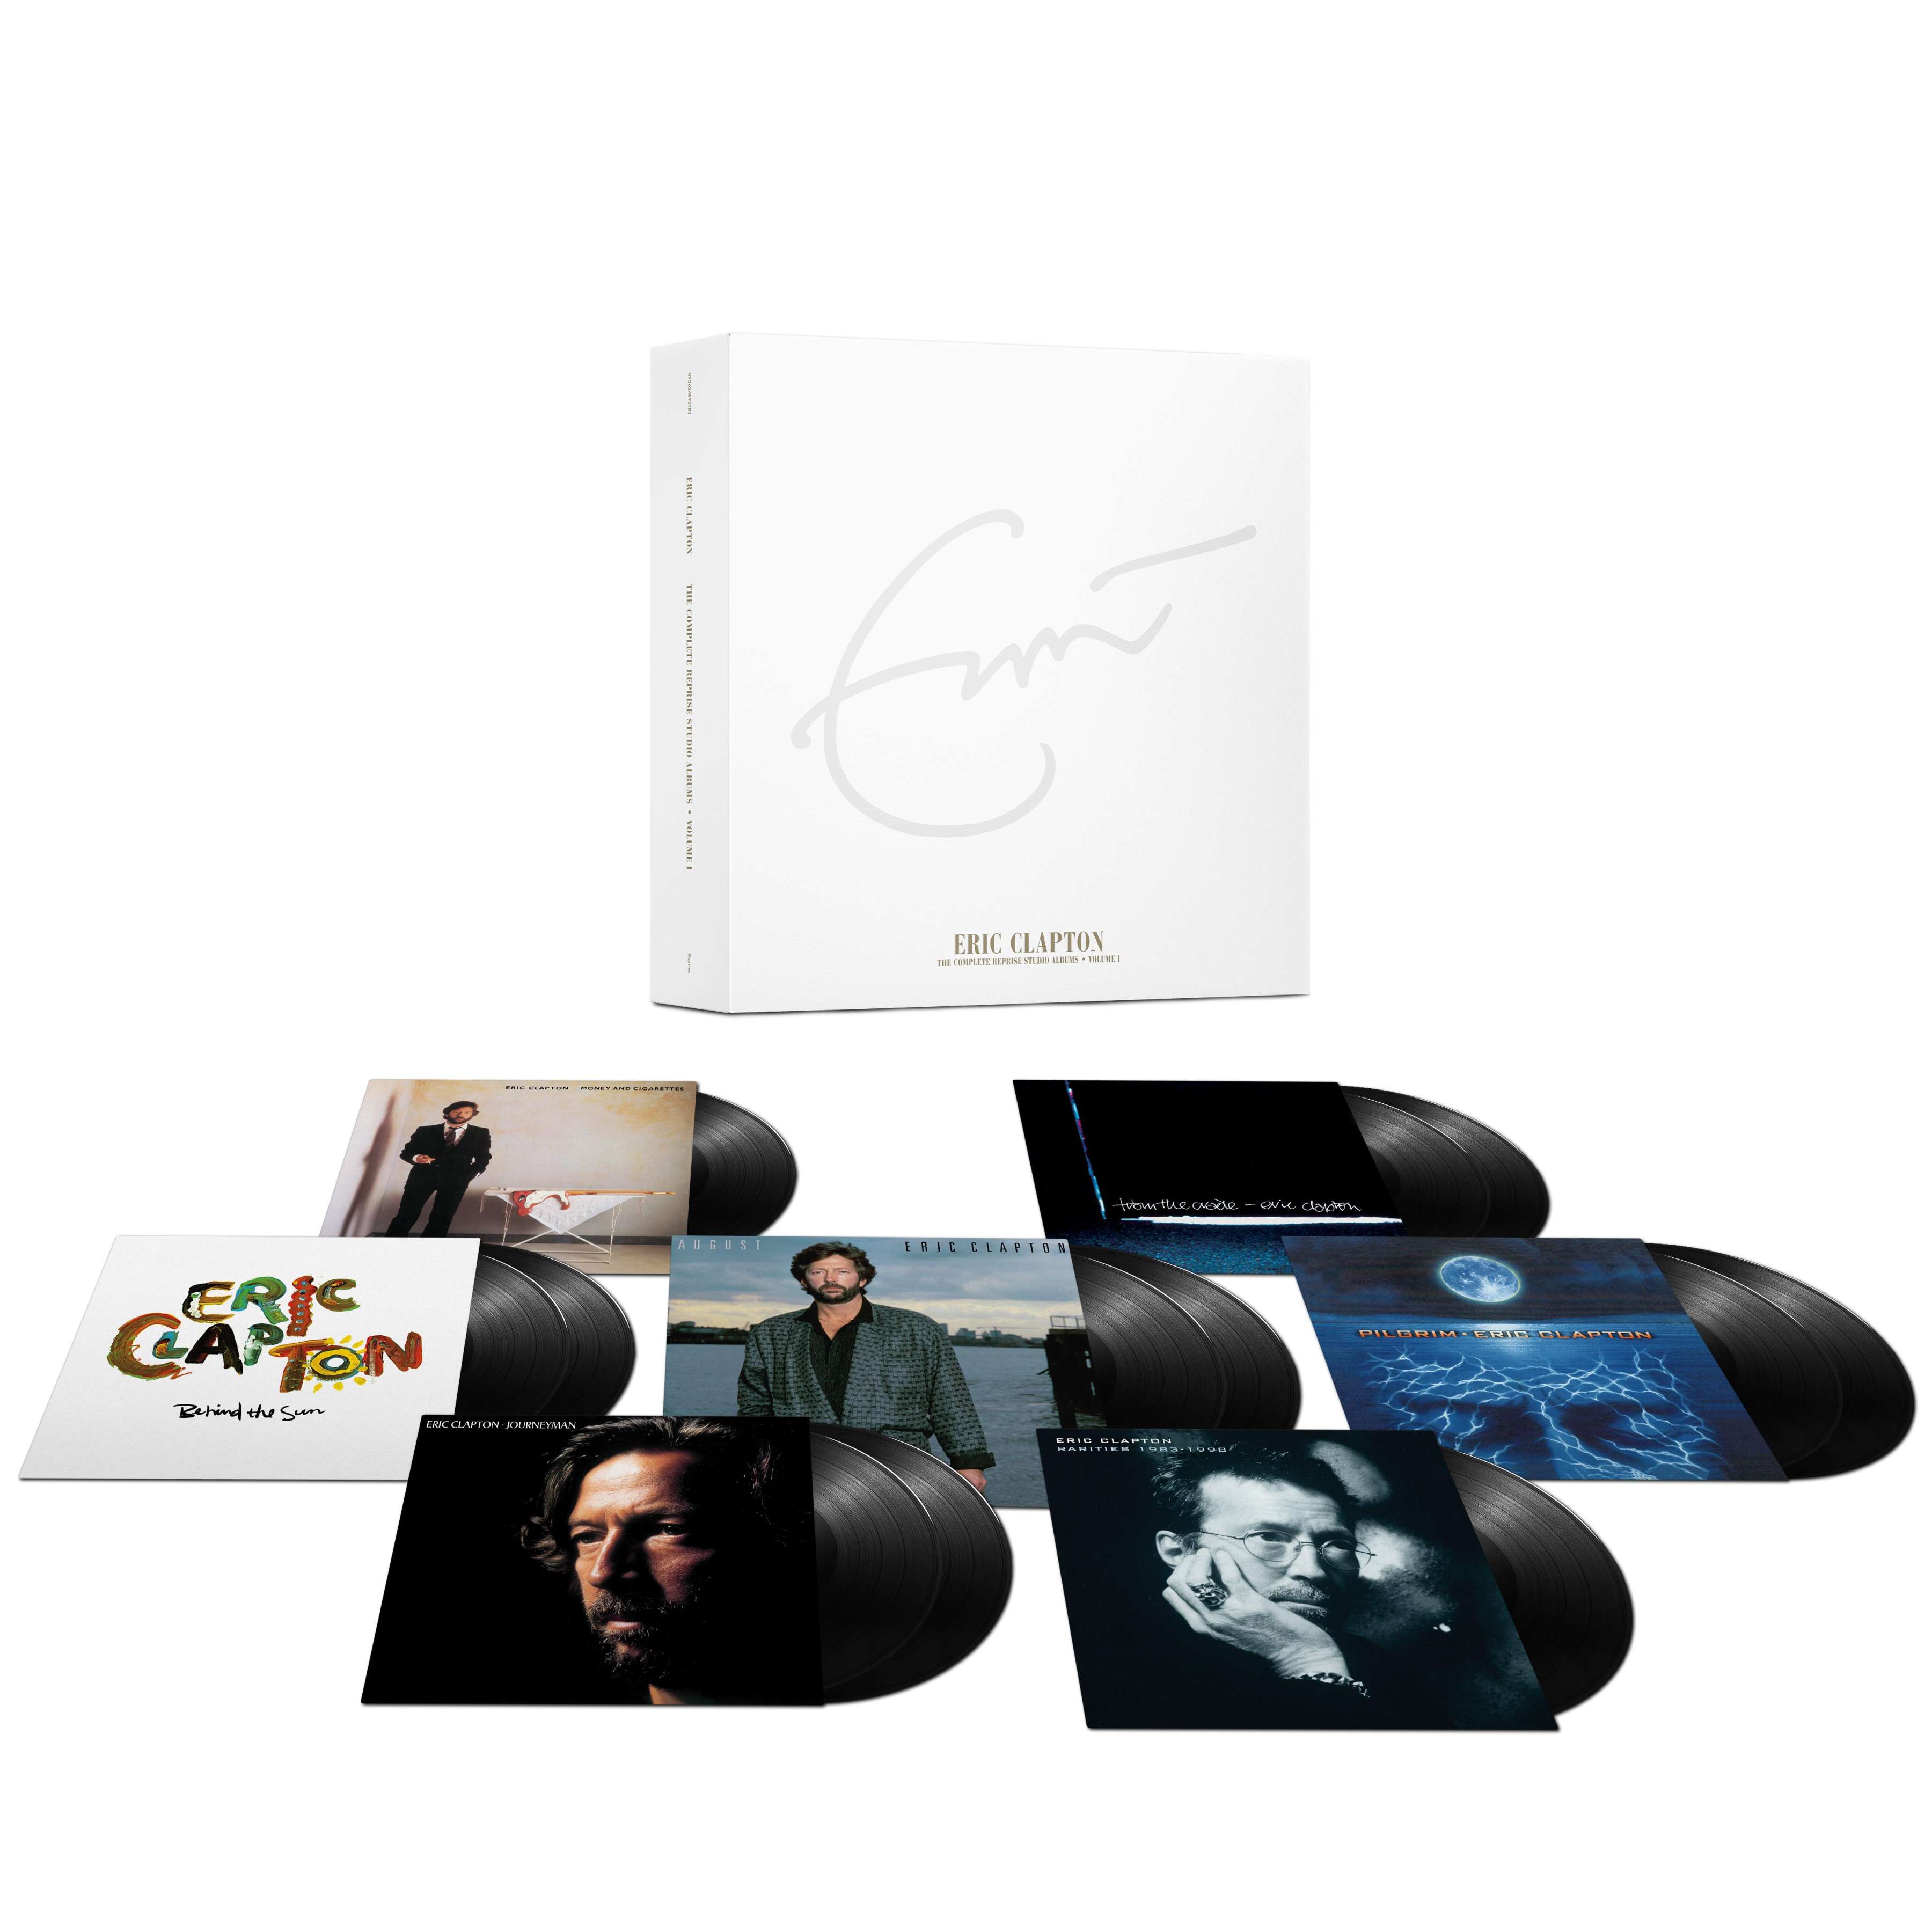 Eric Clapton - The Complete Reprise Studio Albums ● Volume I [Box Set Limited Edition] (093624895183)